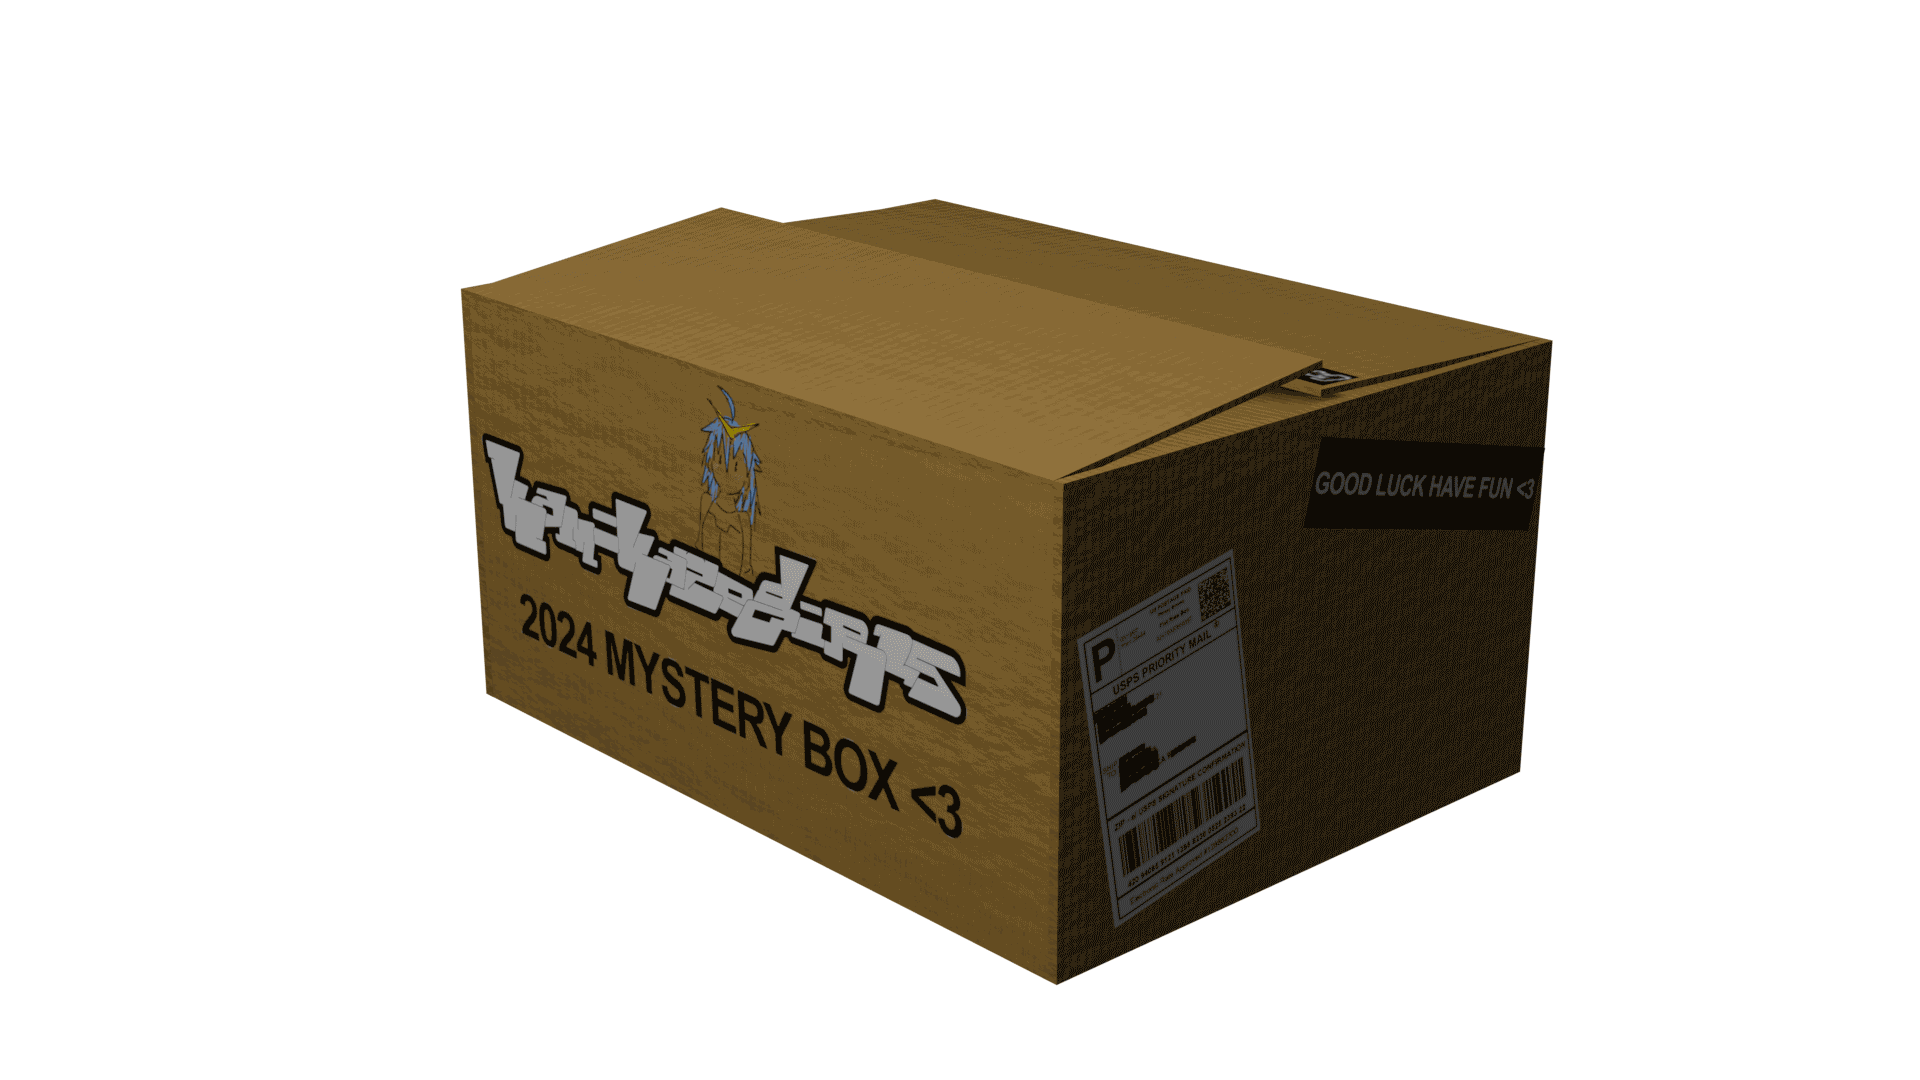 2024 mystery box